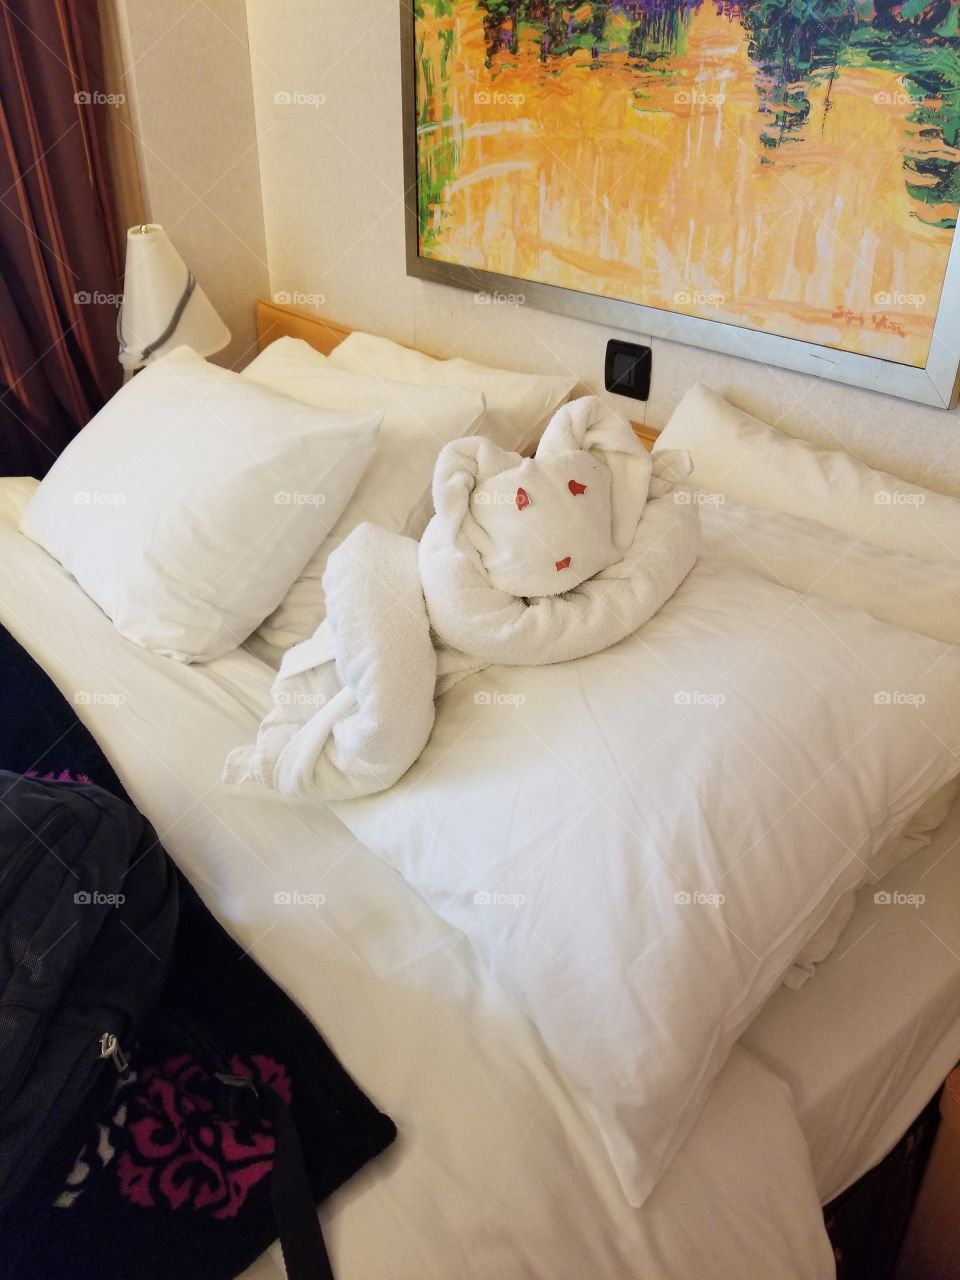 Sleepy koala bear (towel animal) resting on pillows